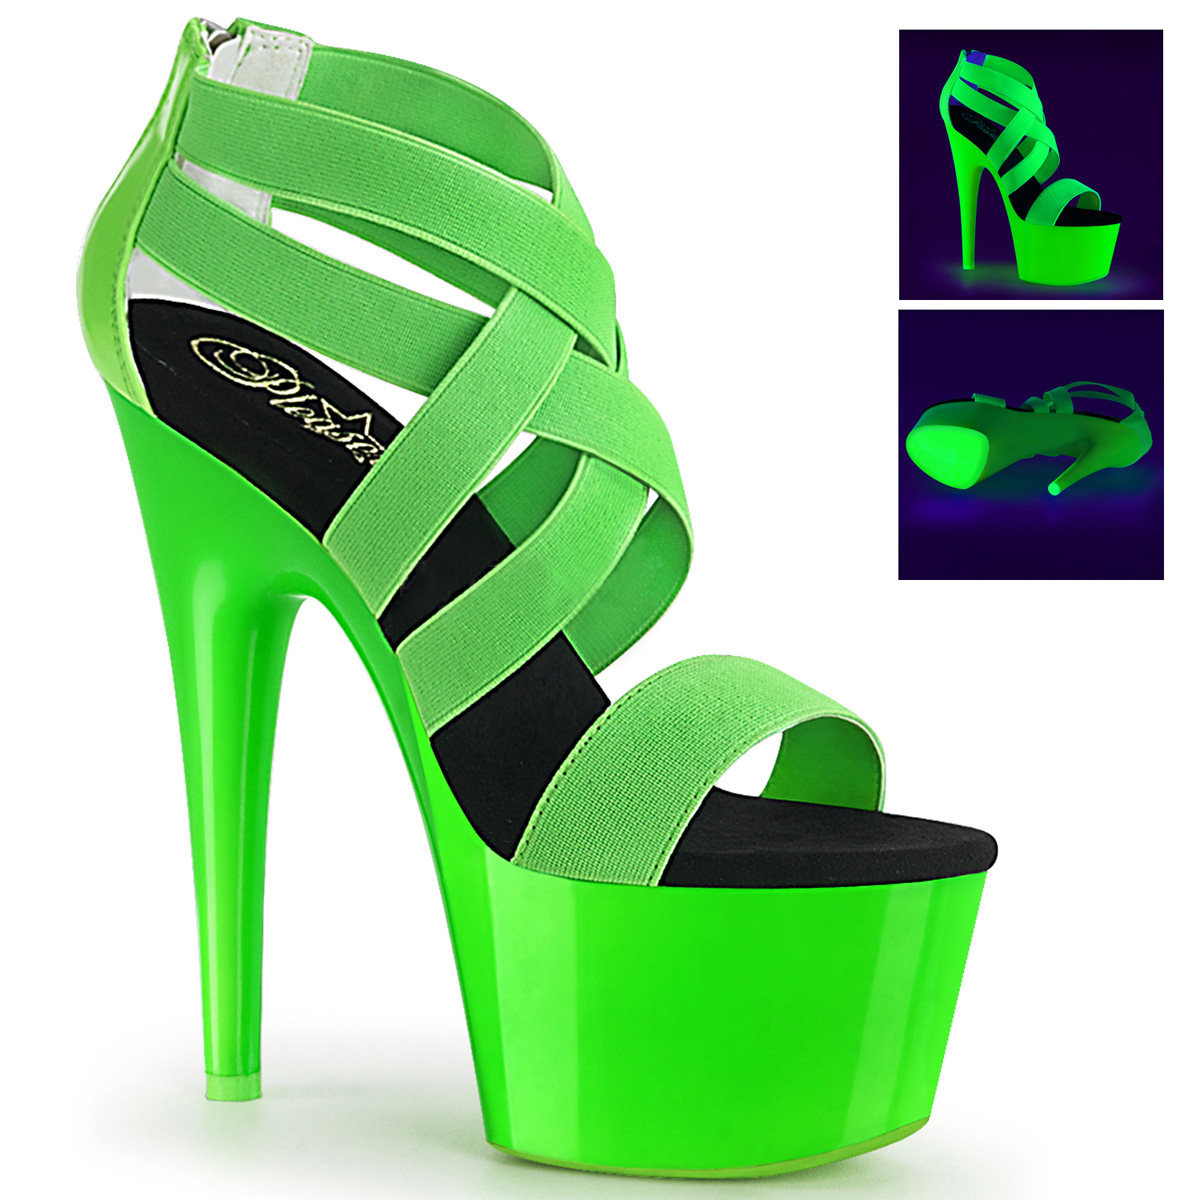 lime green peep toe heels